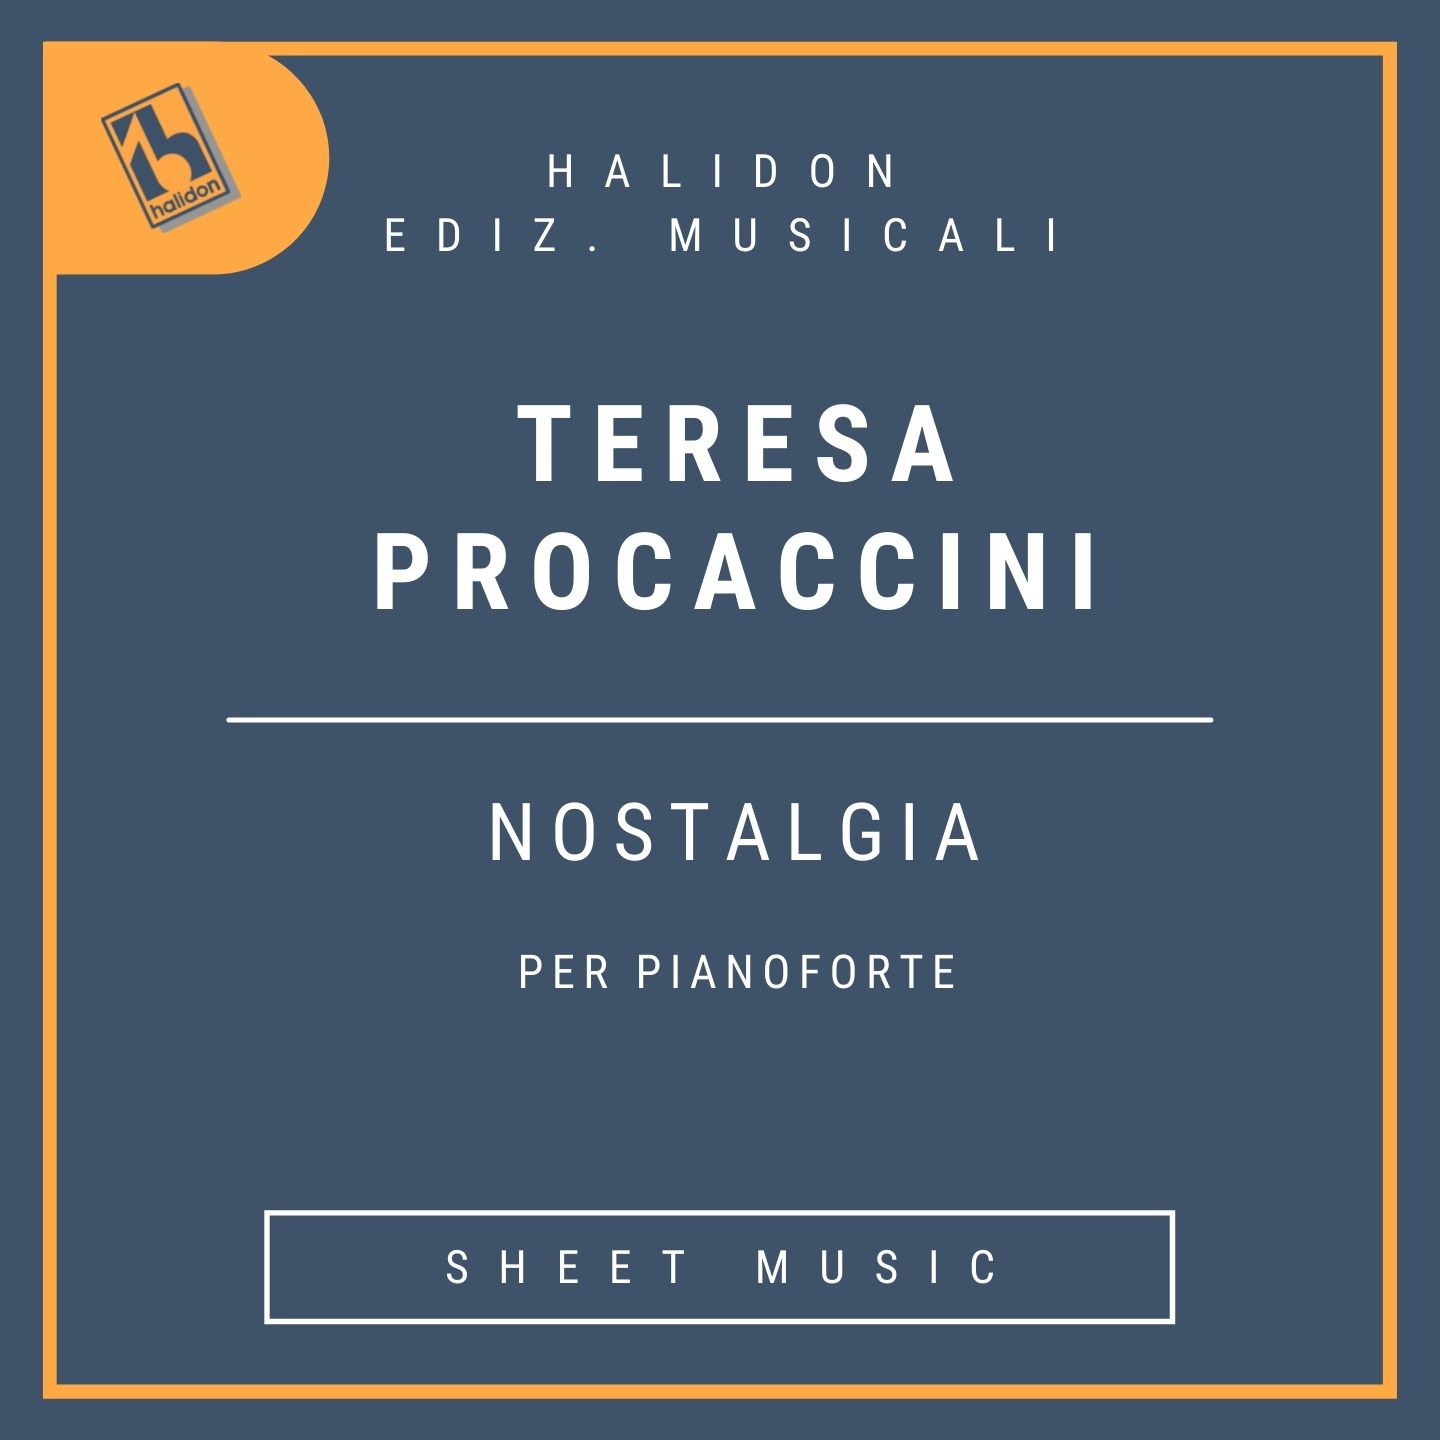 Teresa Procaccini - Nostalgia